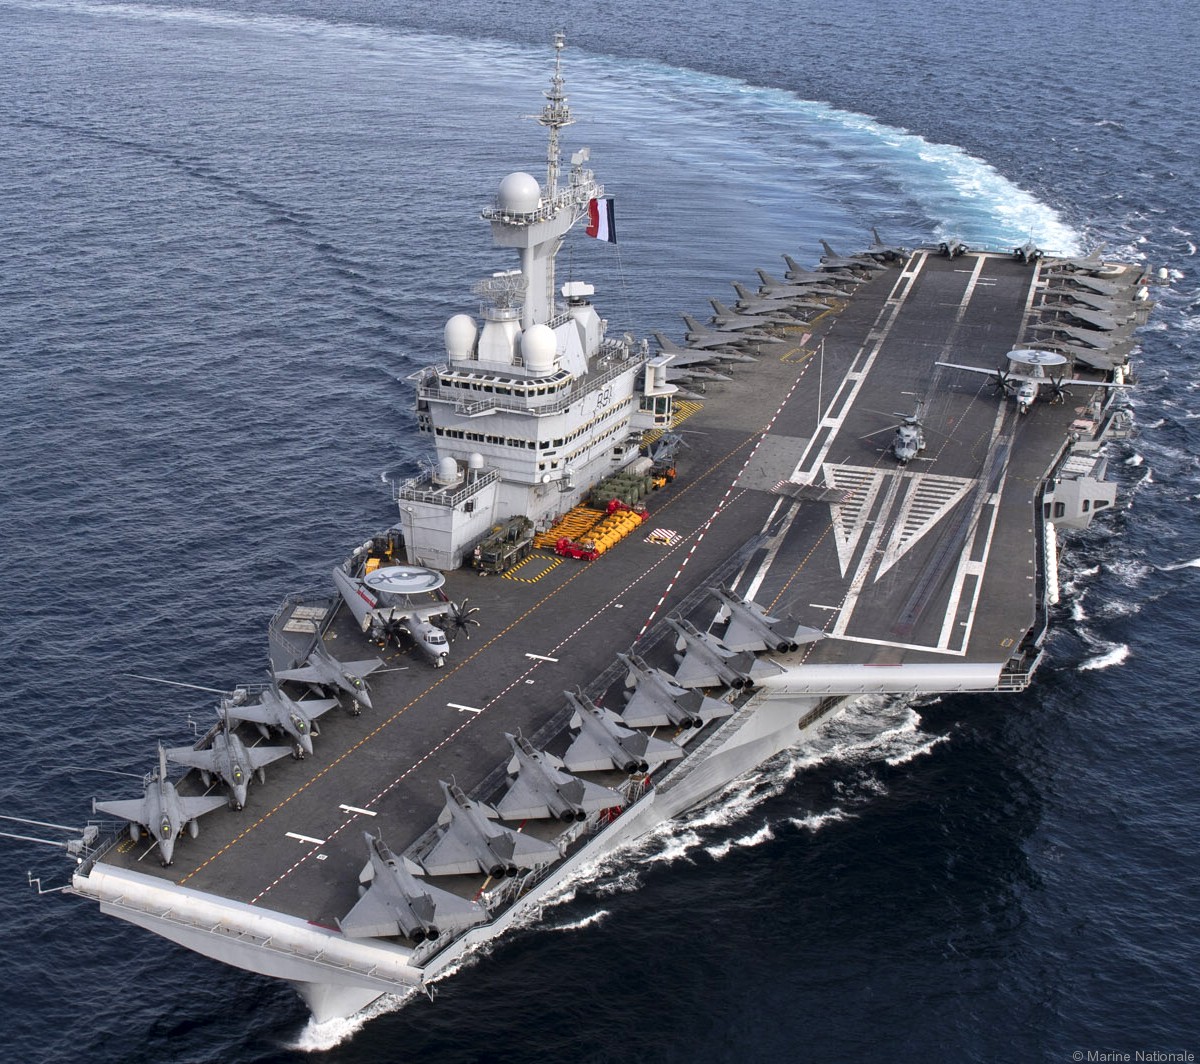 r-91 fs charles de gaulle aircraft carrier french navy marine nationale dassault rafale-m 79